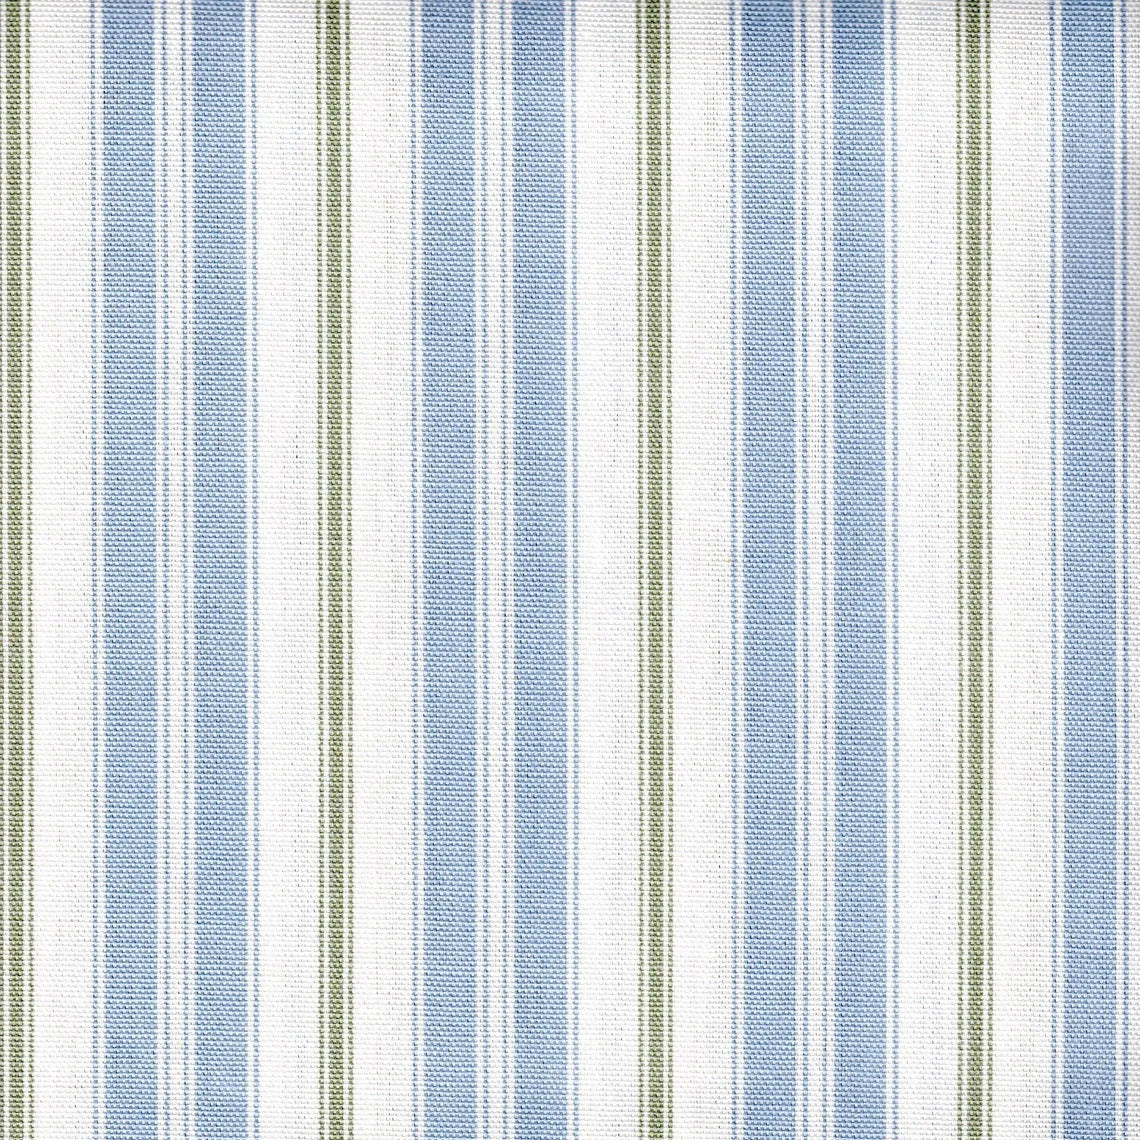 shower curtain in newbury antique blue stripe- blue, green, white